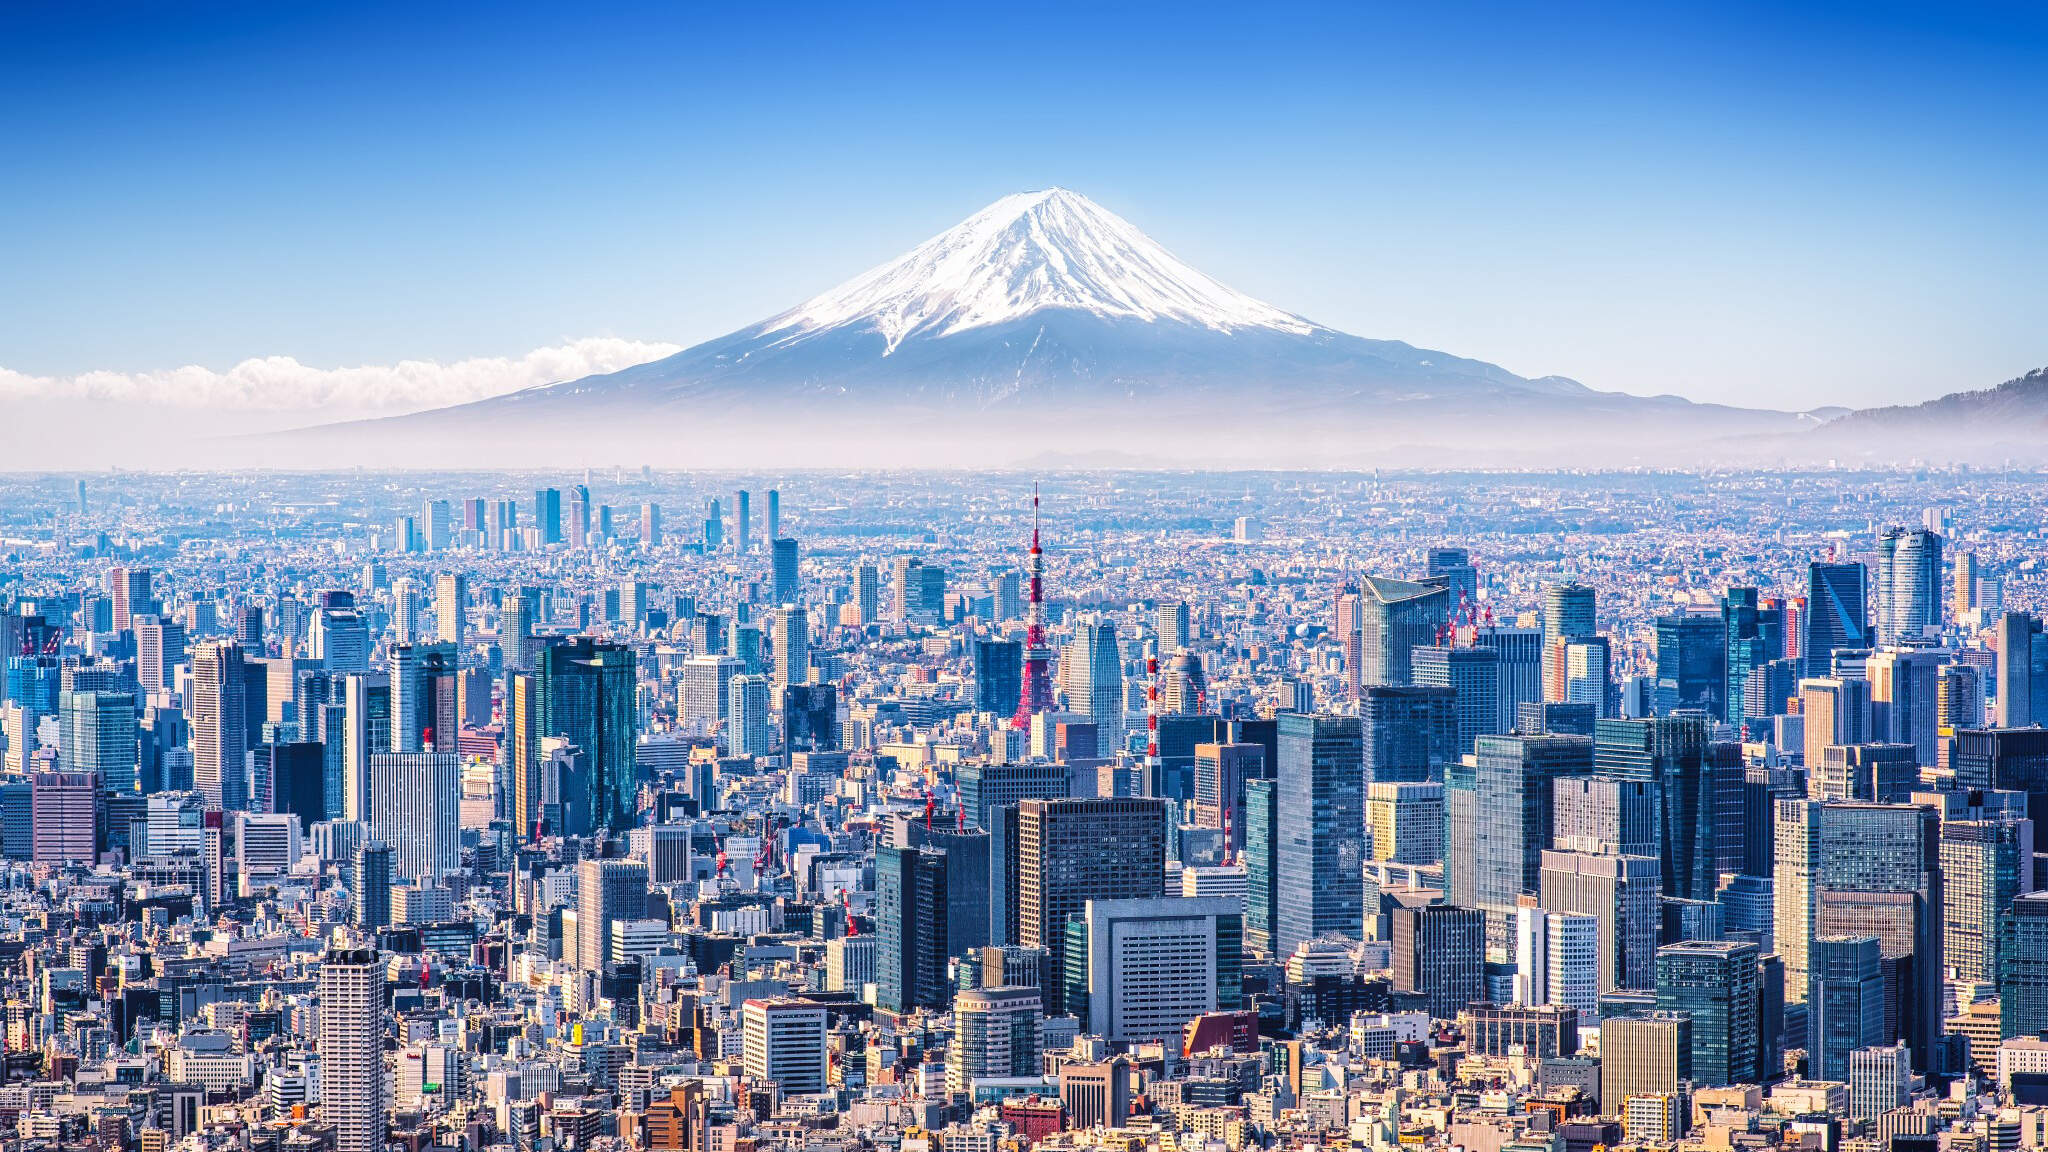 Tokyo, den ekonomiska metropolen vid foten av berget Fuji.
 